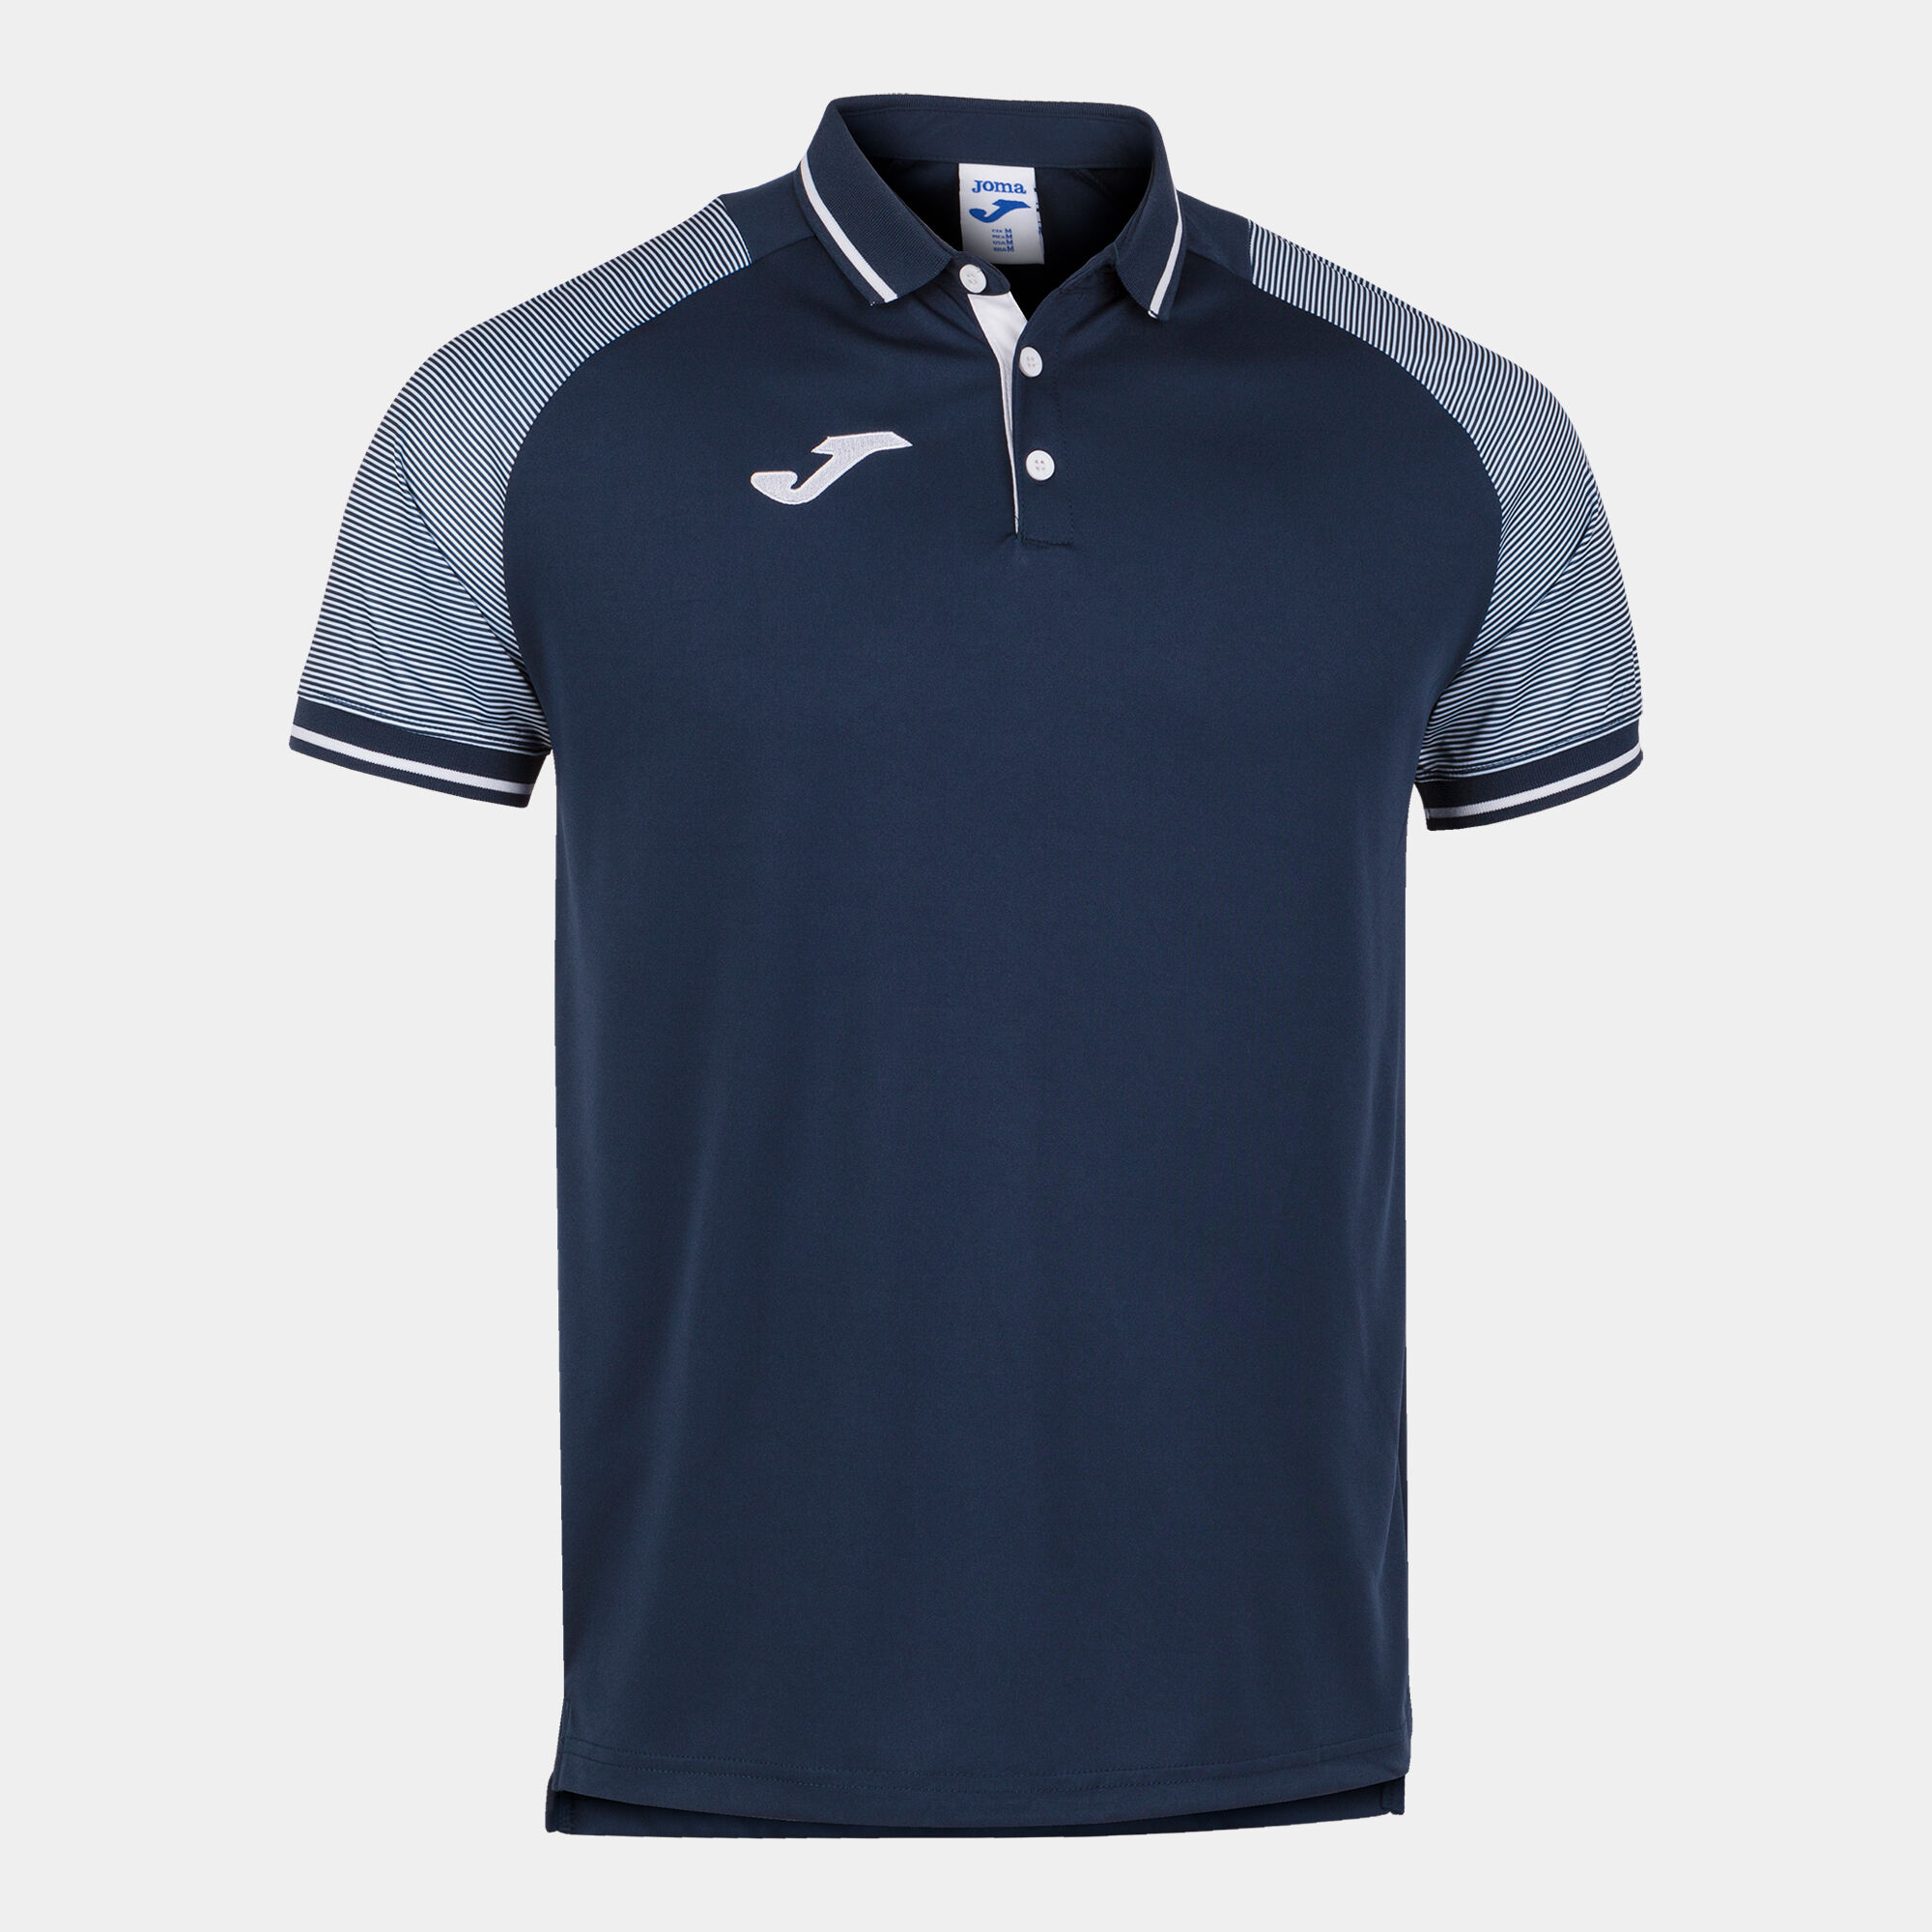 Polo shirt short-sleeve man Essential II navy blue white